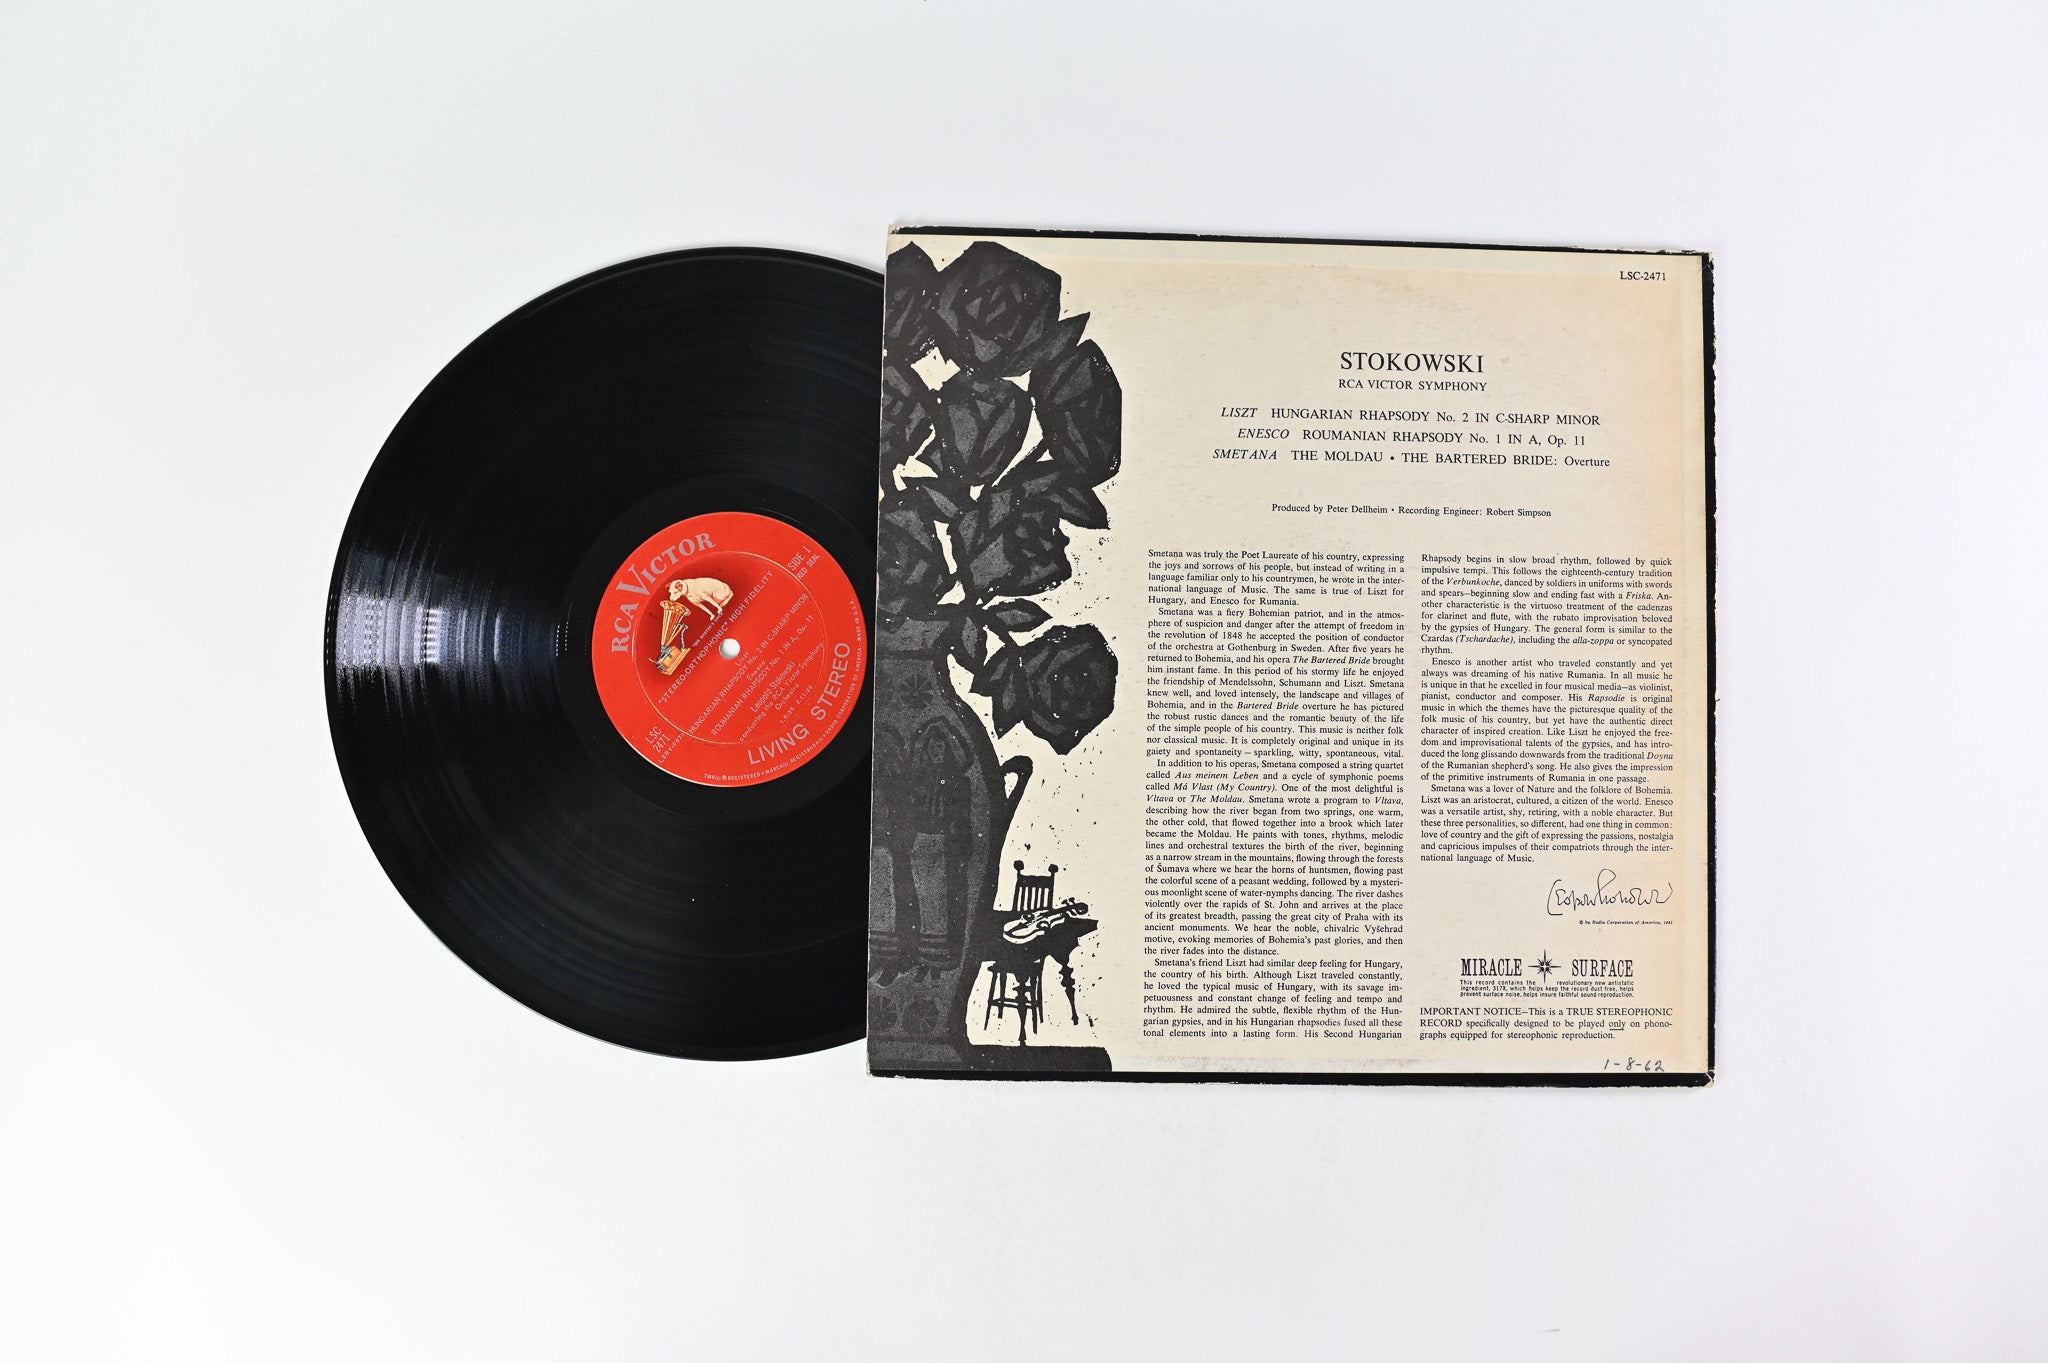 Leopold Stokowski - Hungarian Rhapsody No.2 In C-Sharp Minor on RCA LSC 2471 Living Stereo